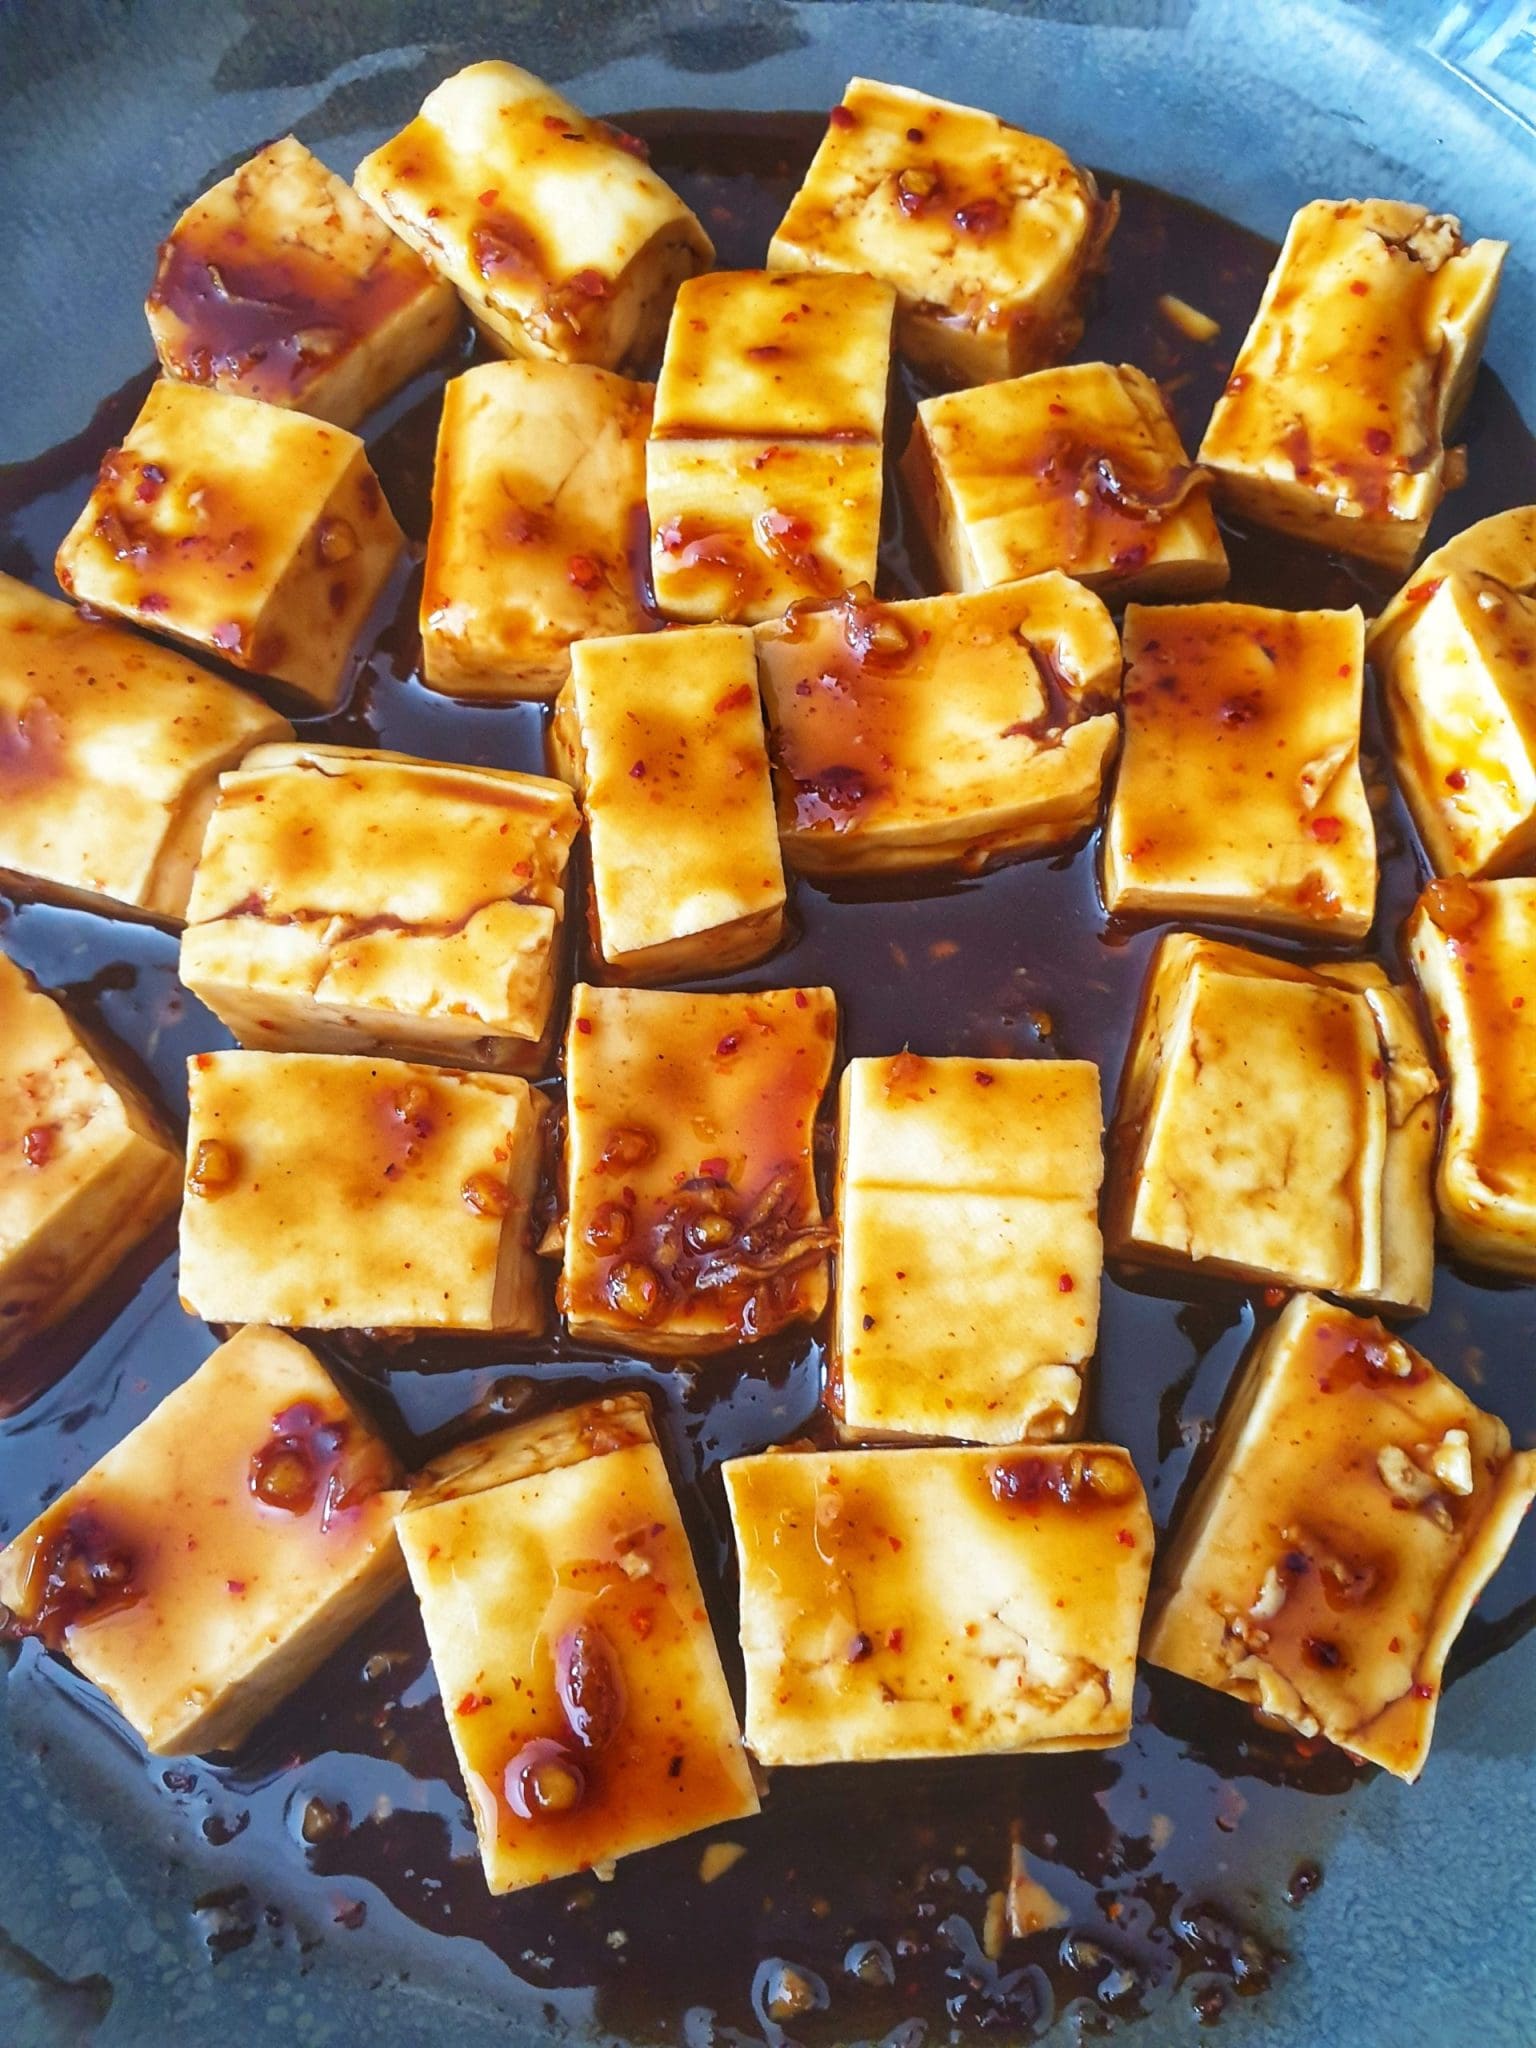 Veggie Tofu Stir-fry Recipe by My Anosmic Kitchen